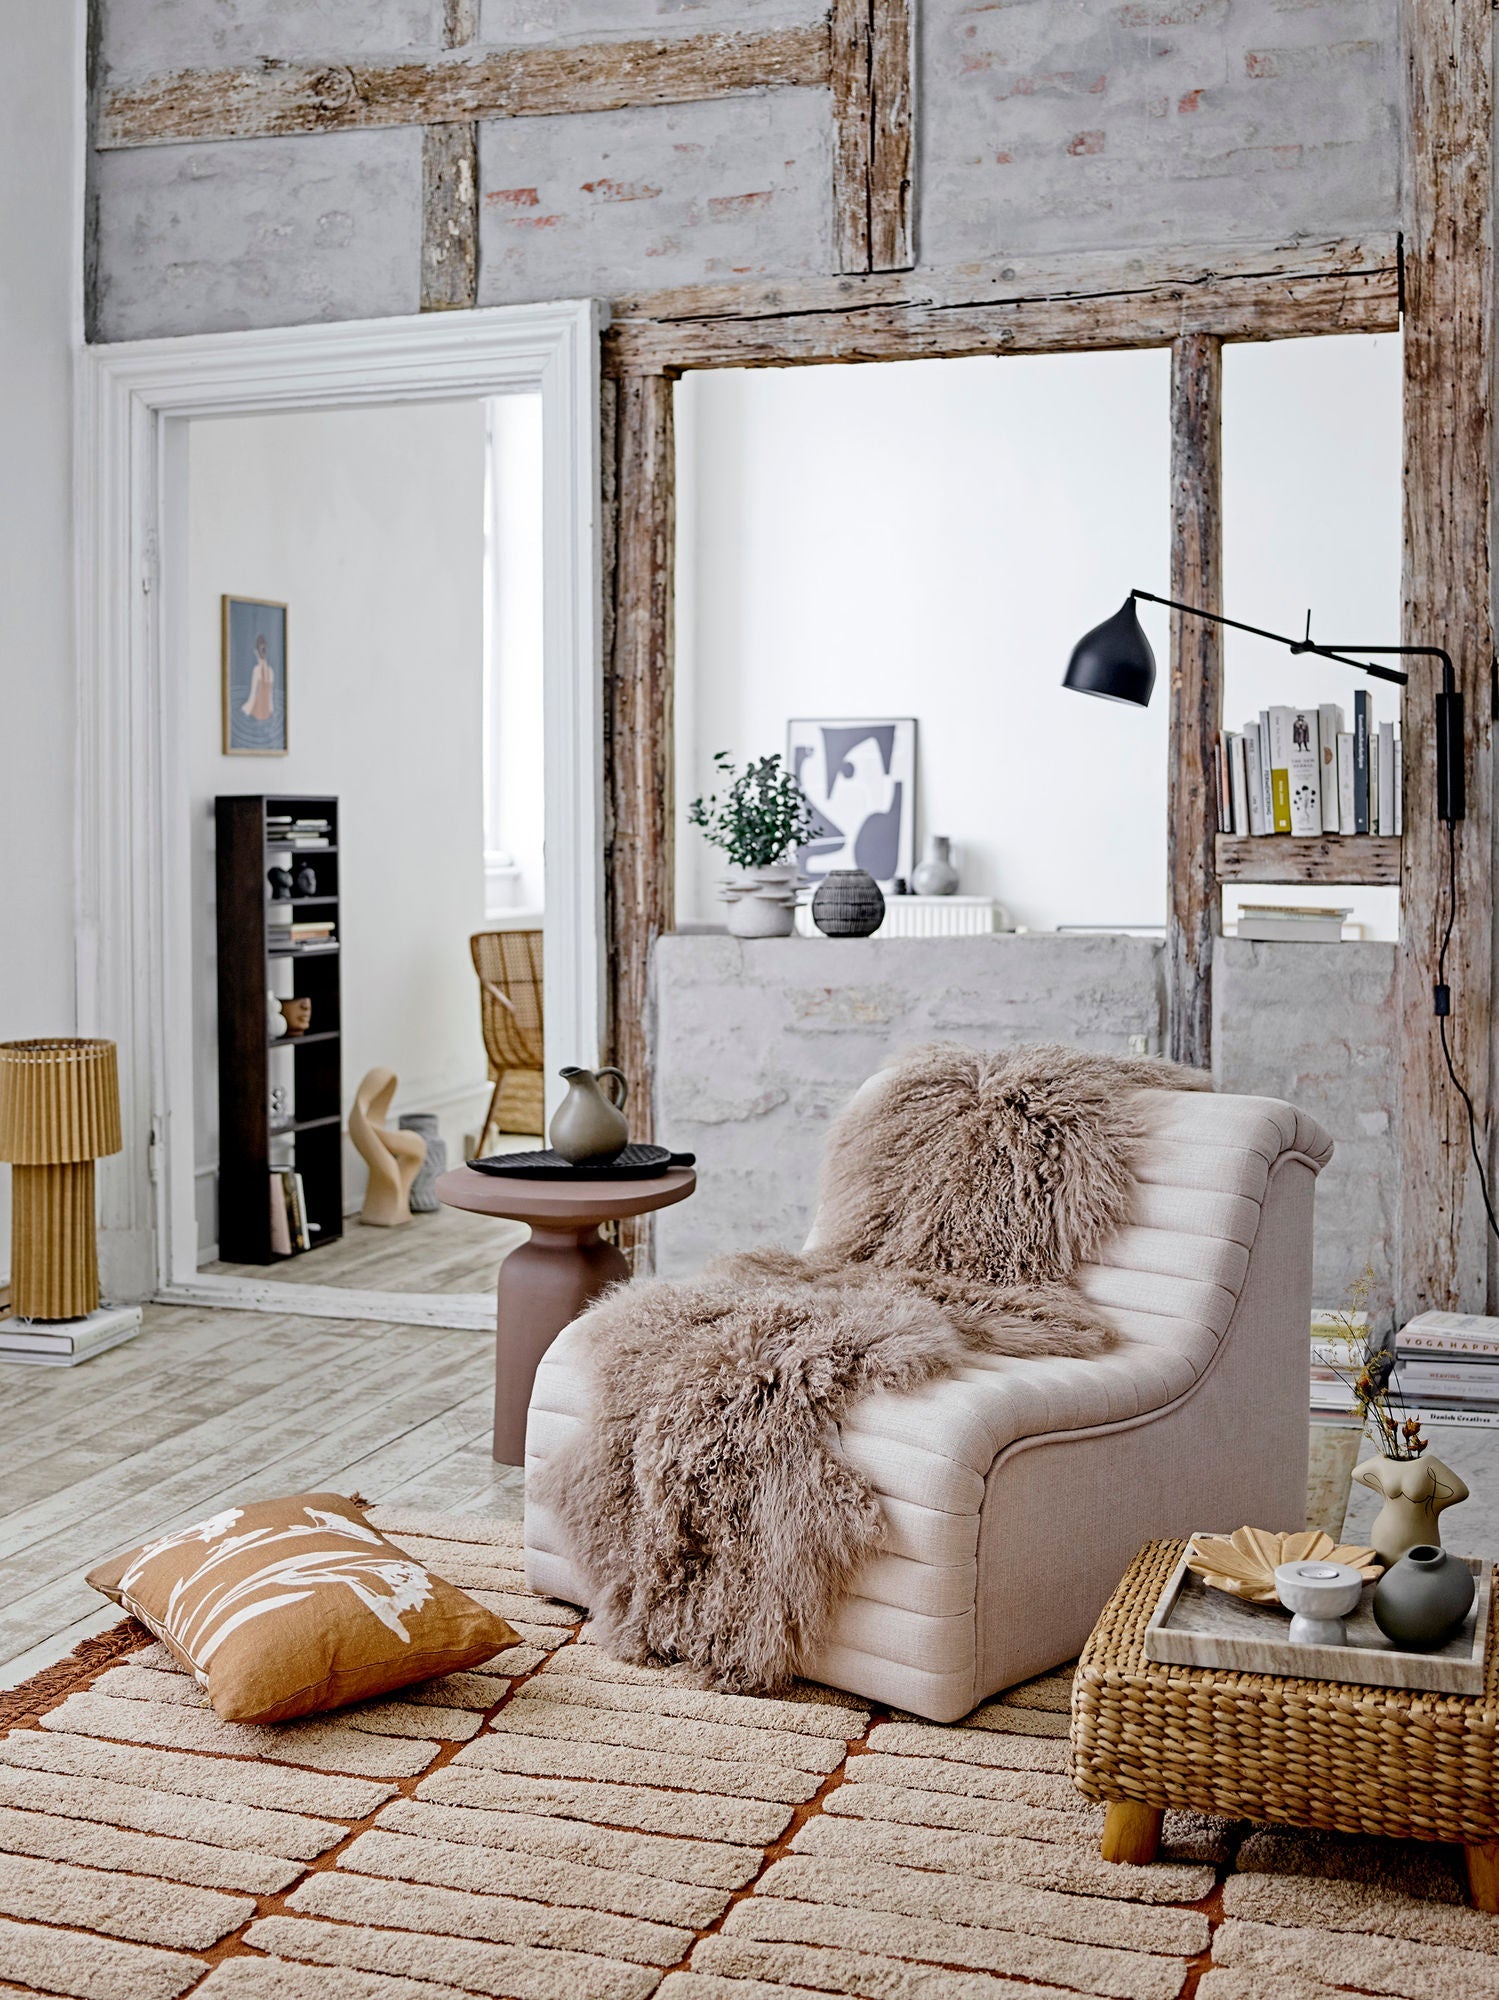 Lounge Chair, příroda, polyester